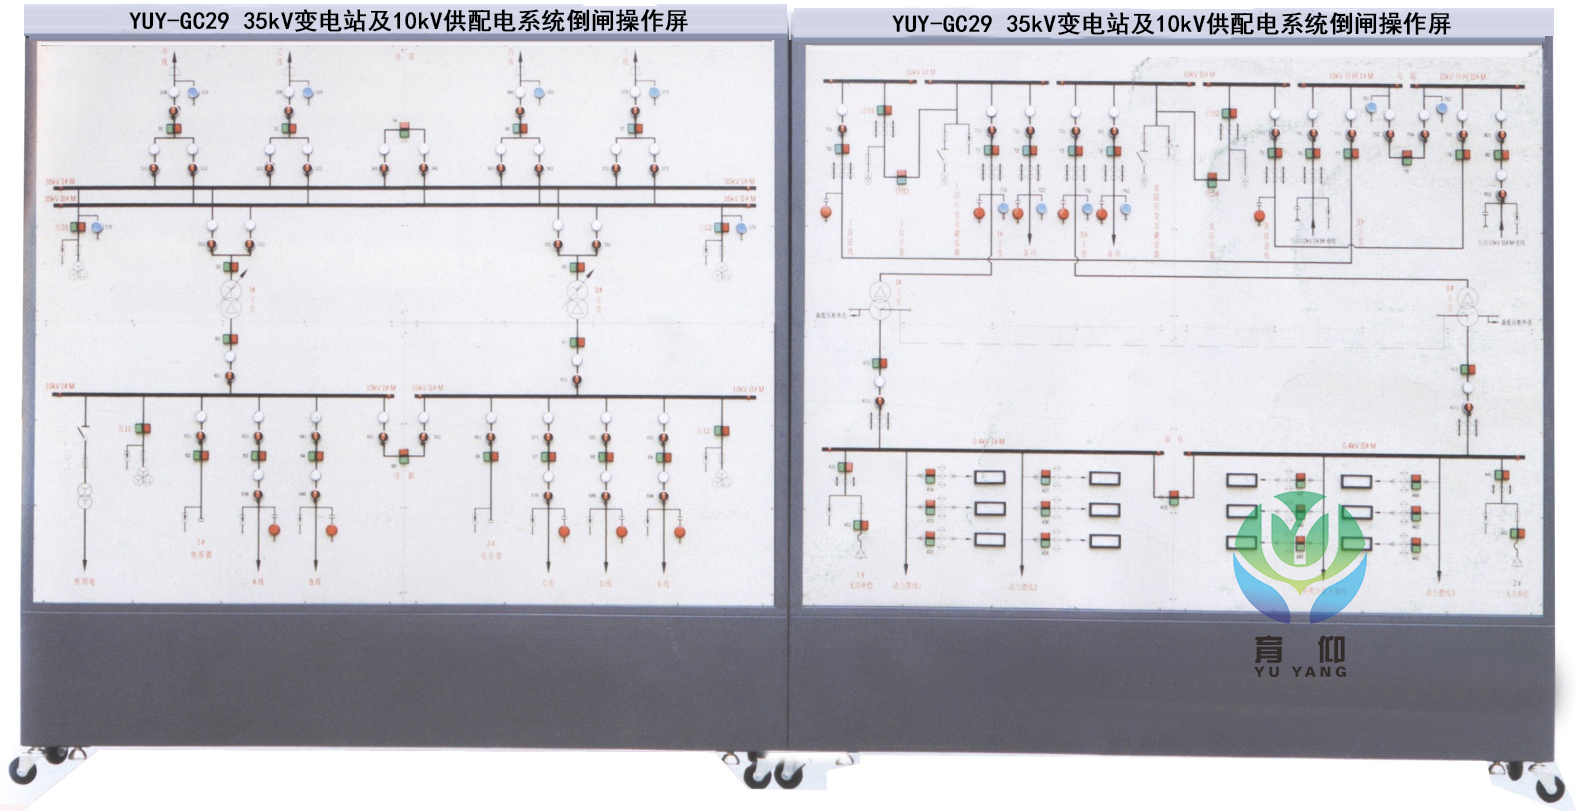 <b>YUY-GC29 35kV变电站及10kV供配电系统倒闸操作屏</b>